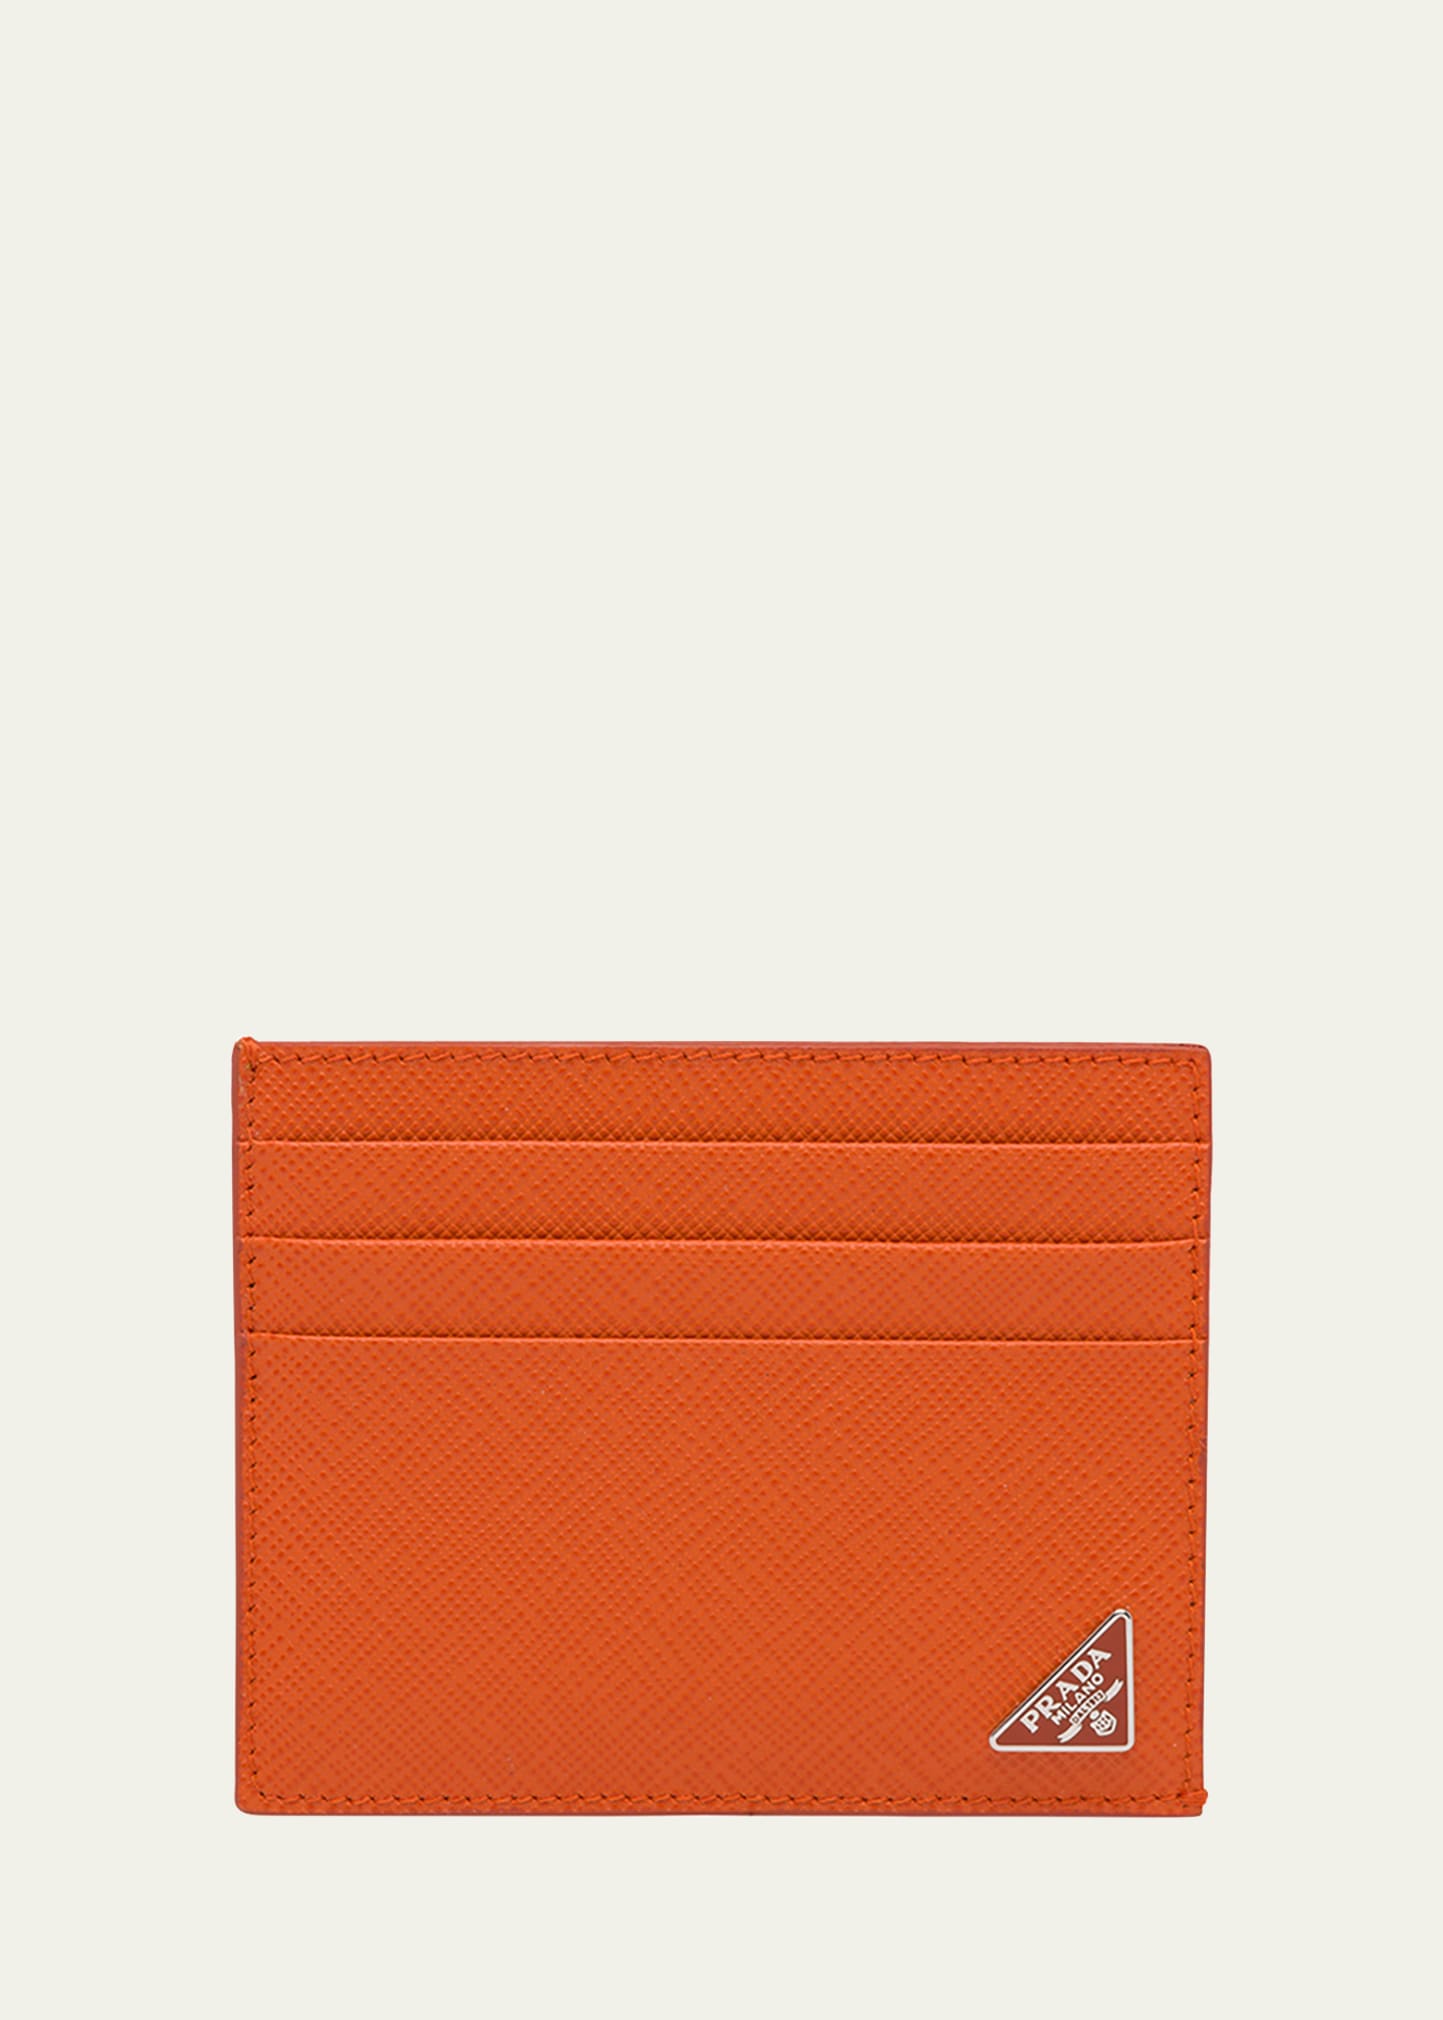 Prada Men's Saffiano Leather Logo Card Case In F0s73 Papaya